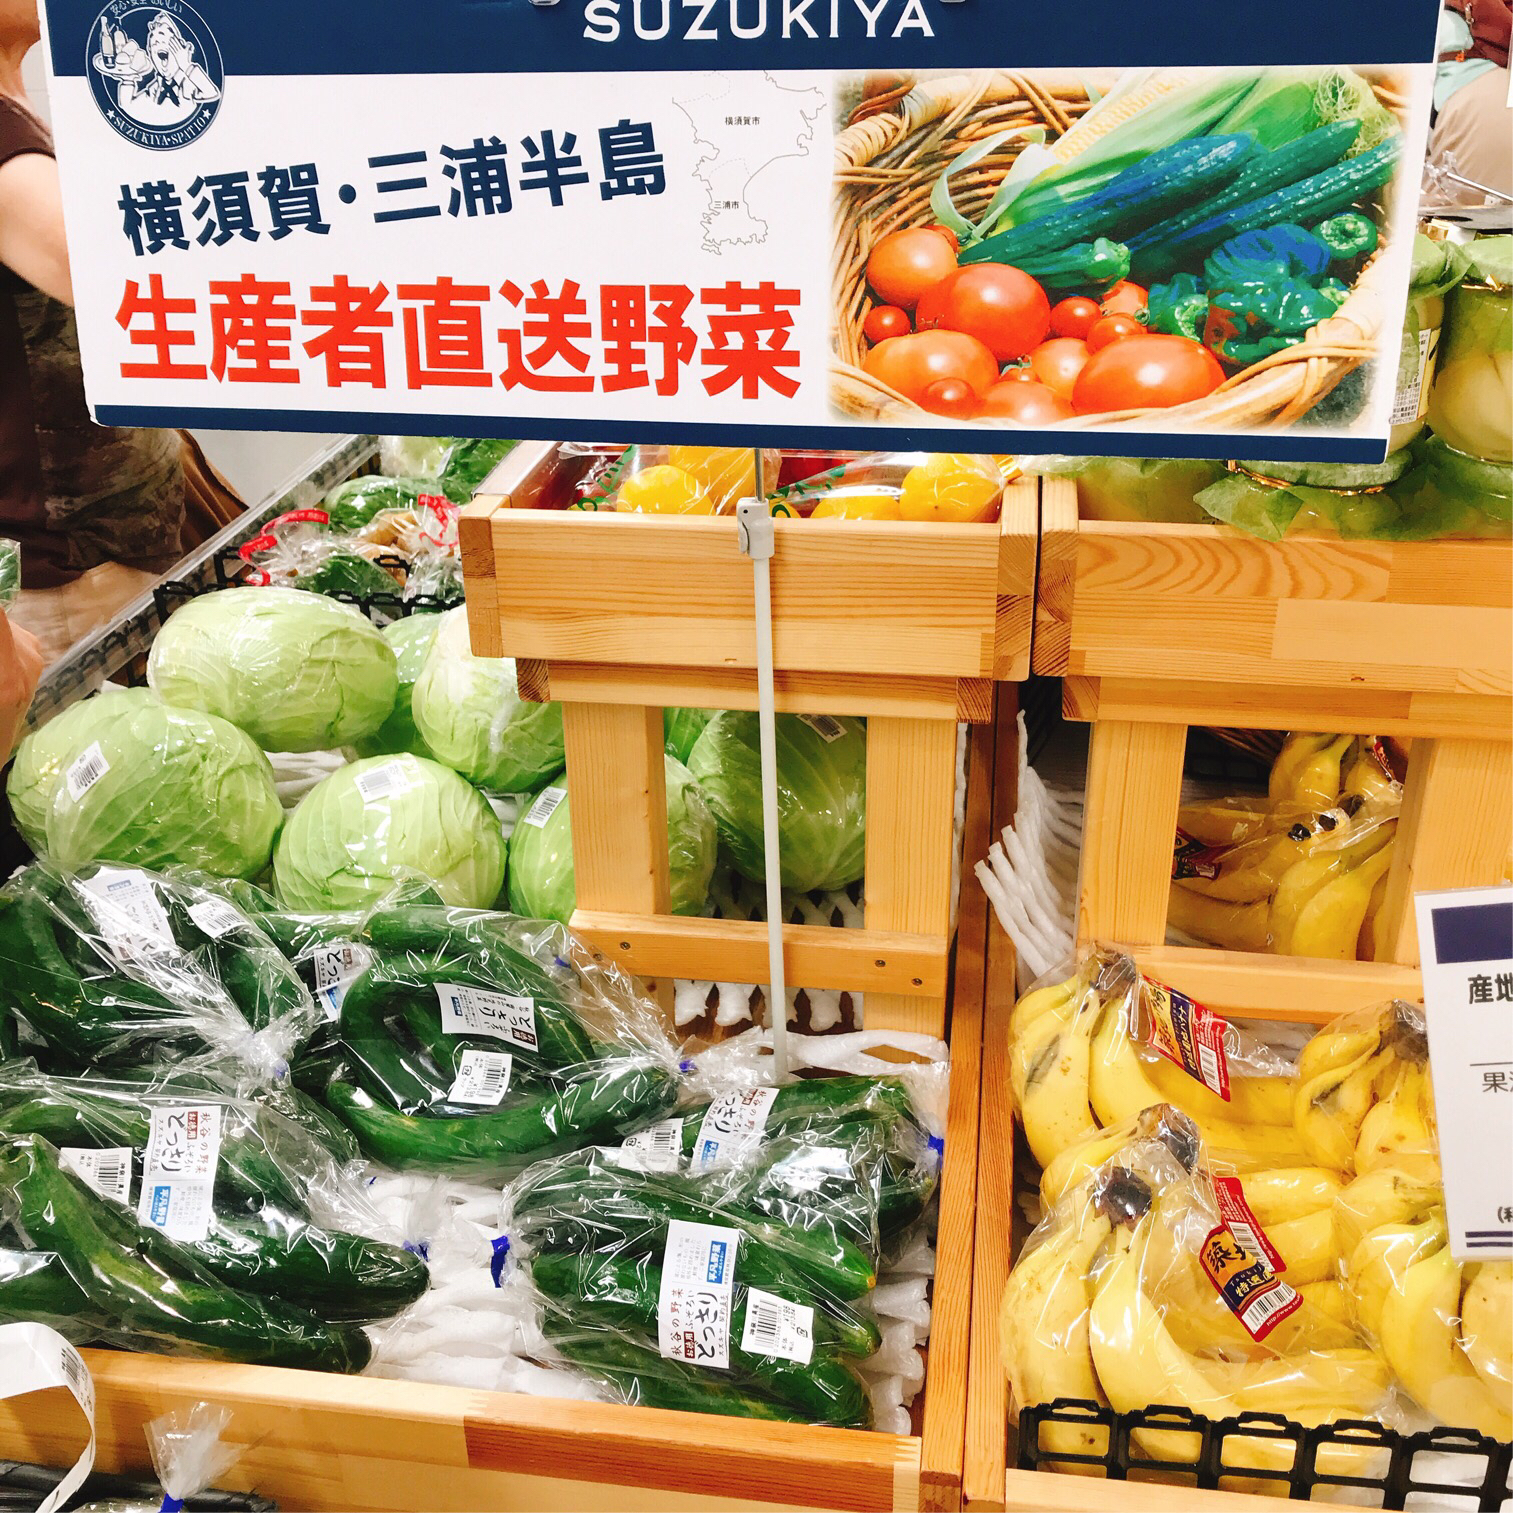 SUZUKIYA直送のお野菜。新鮮で美味しそう。